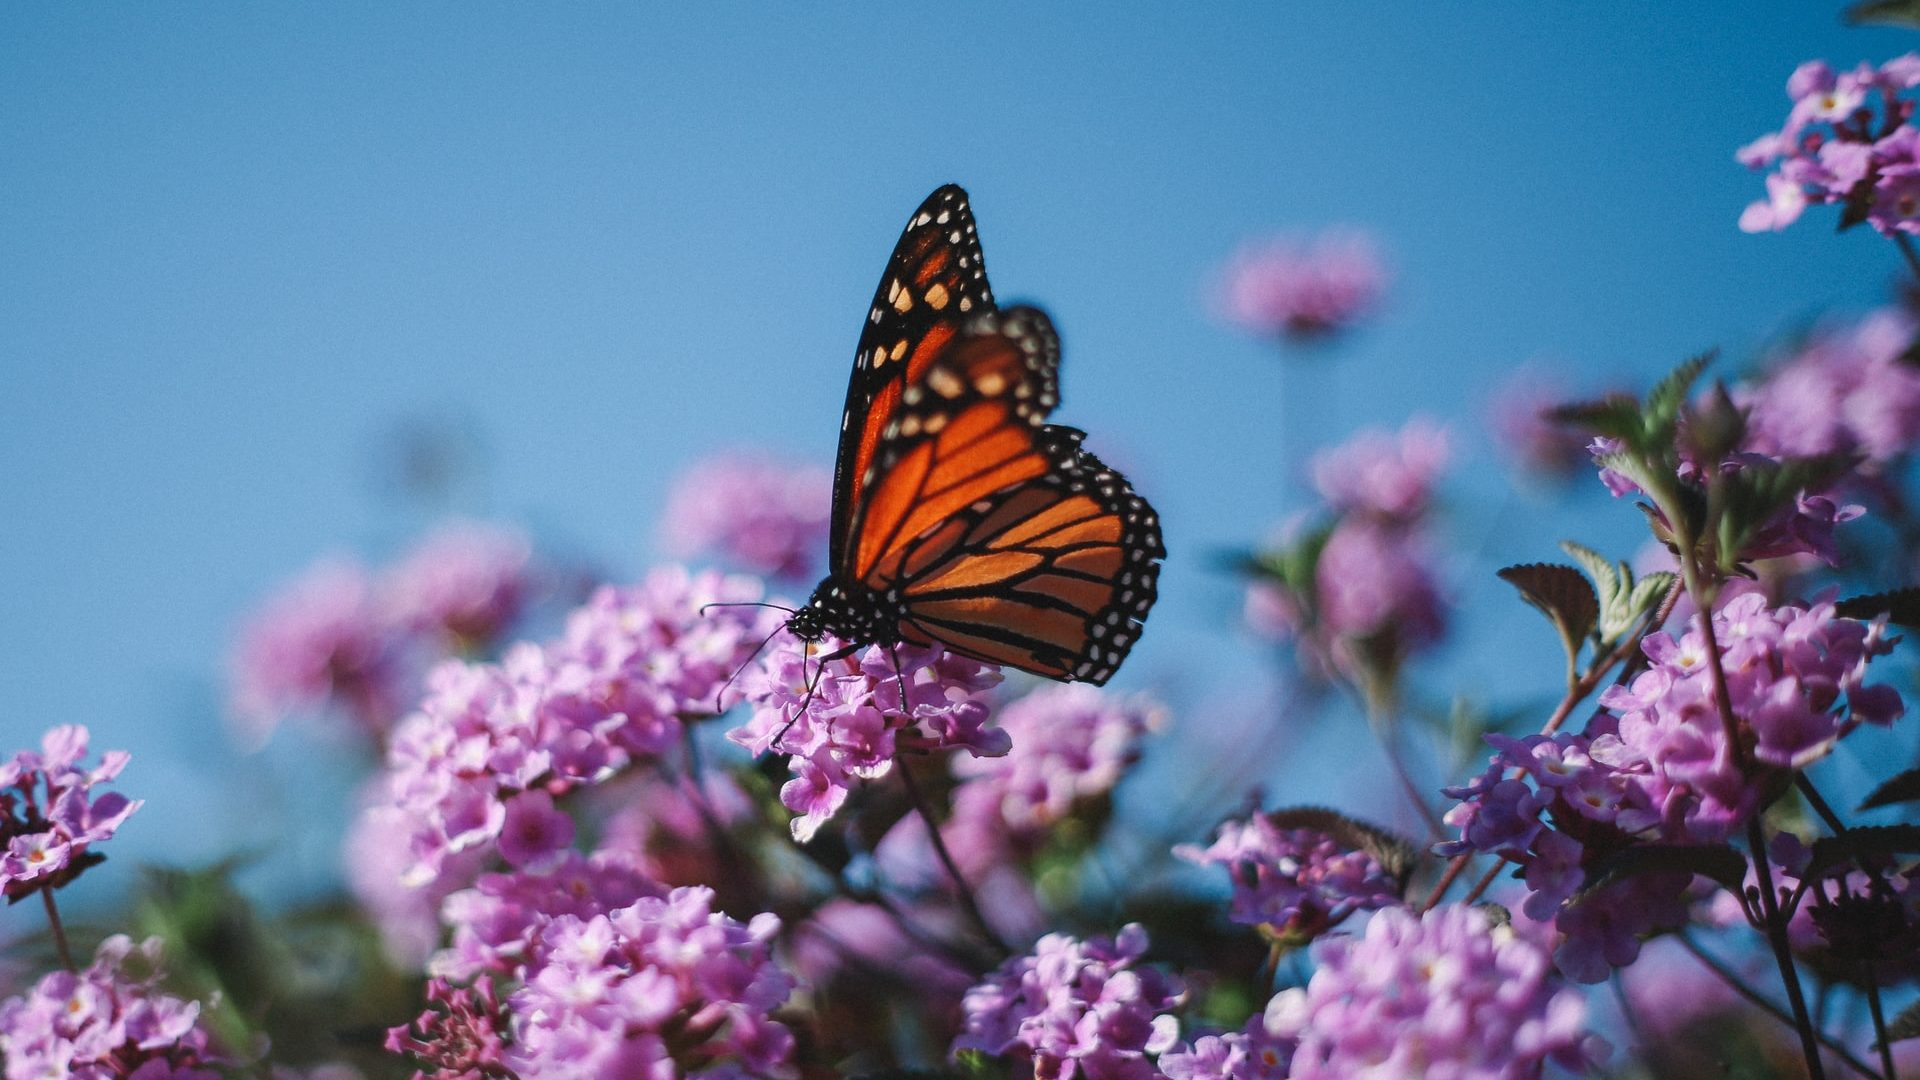 Monarch butterfly resting on flowers